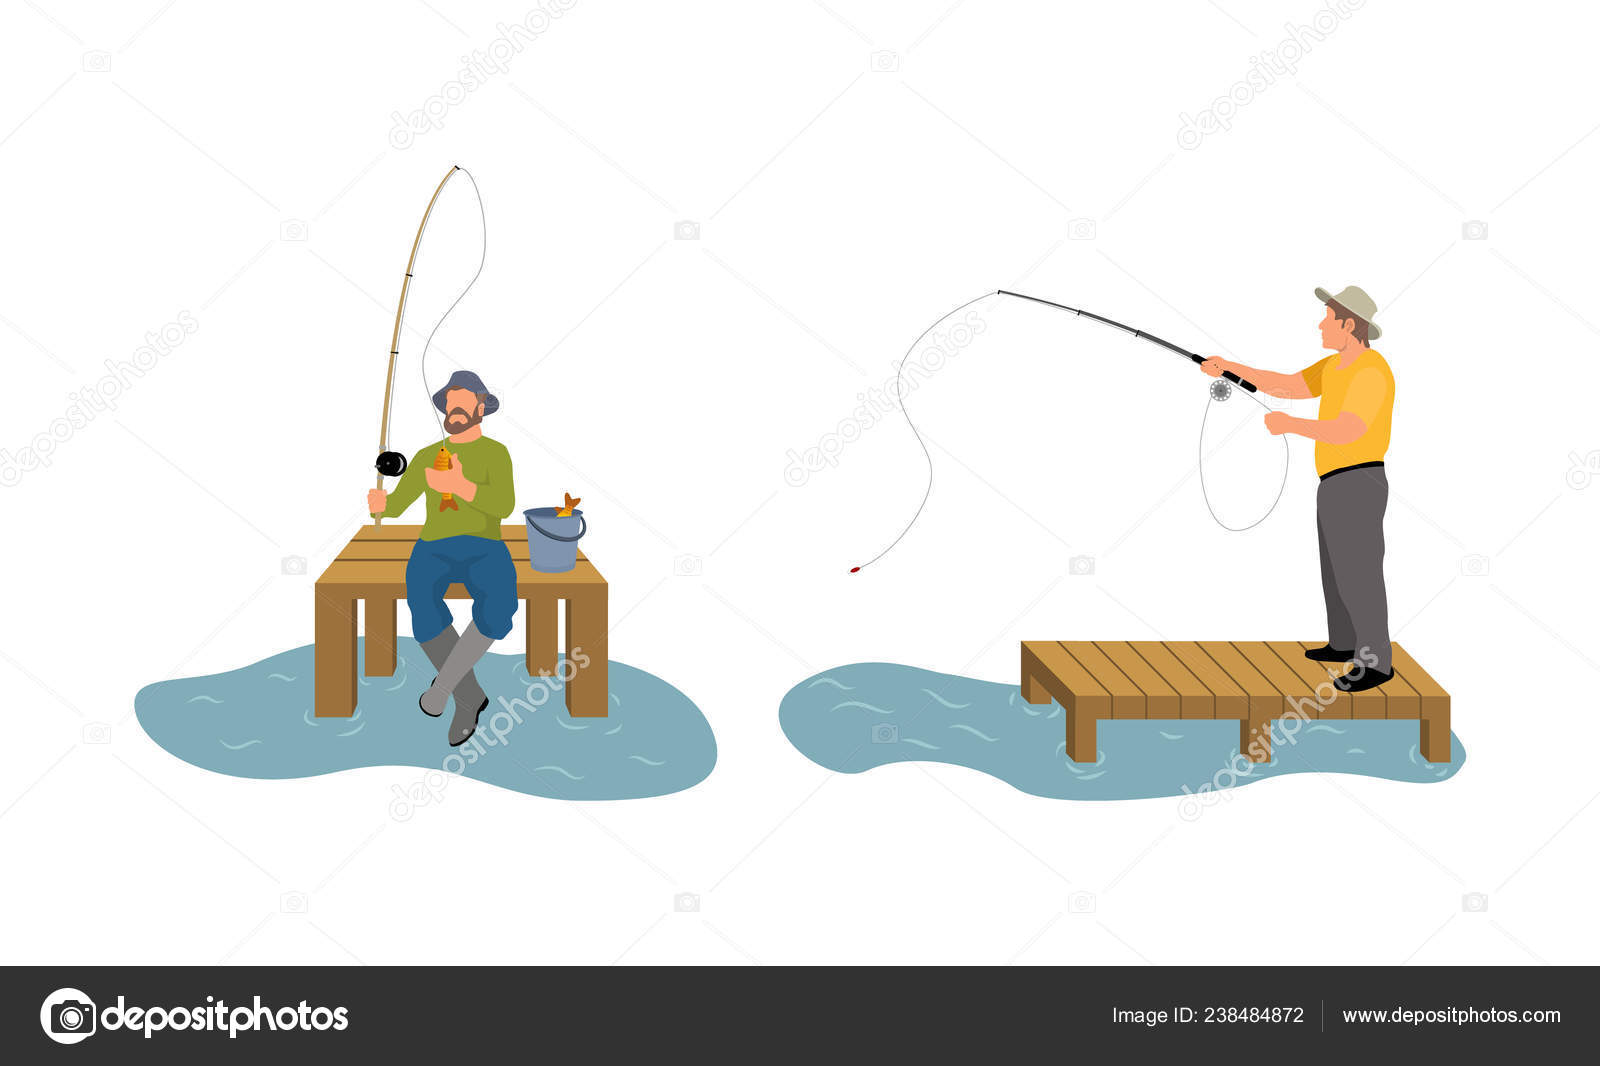 https://st4.depositphotos.com/2419757/23848/v/1600/depositphotos_238484872-stock-illustration-fishing-men-on-wooden-pier.jpg